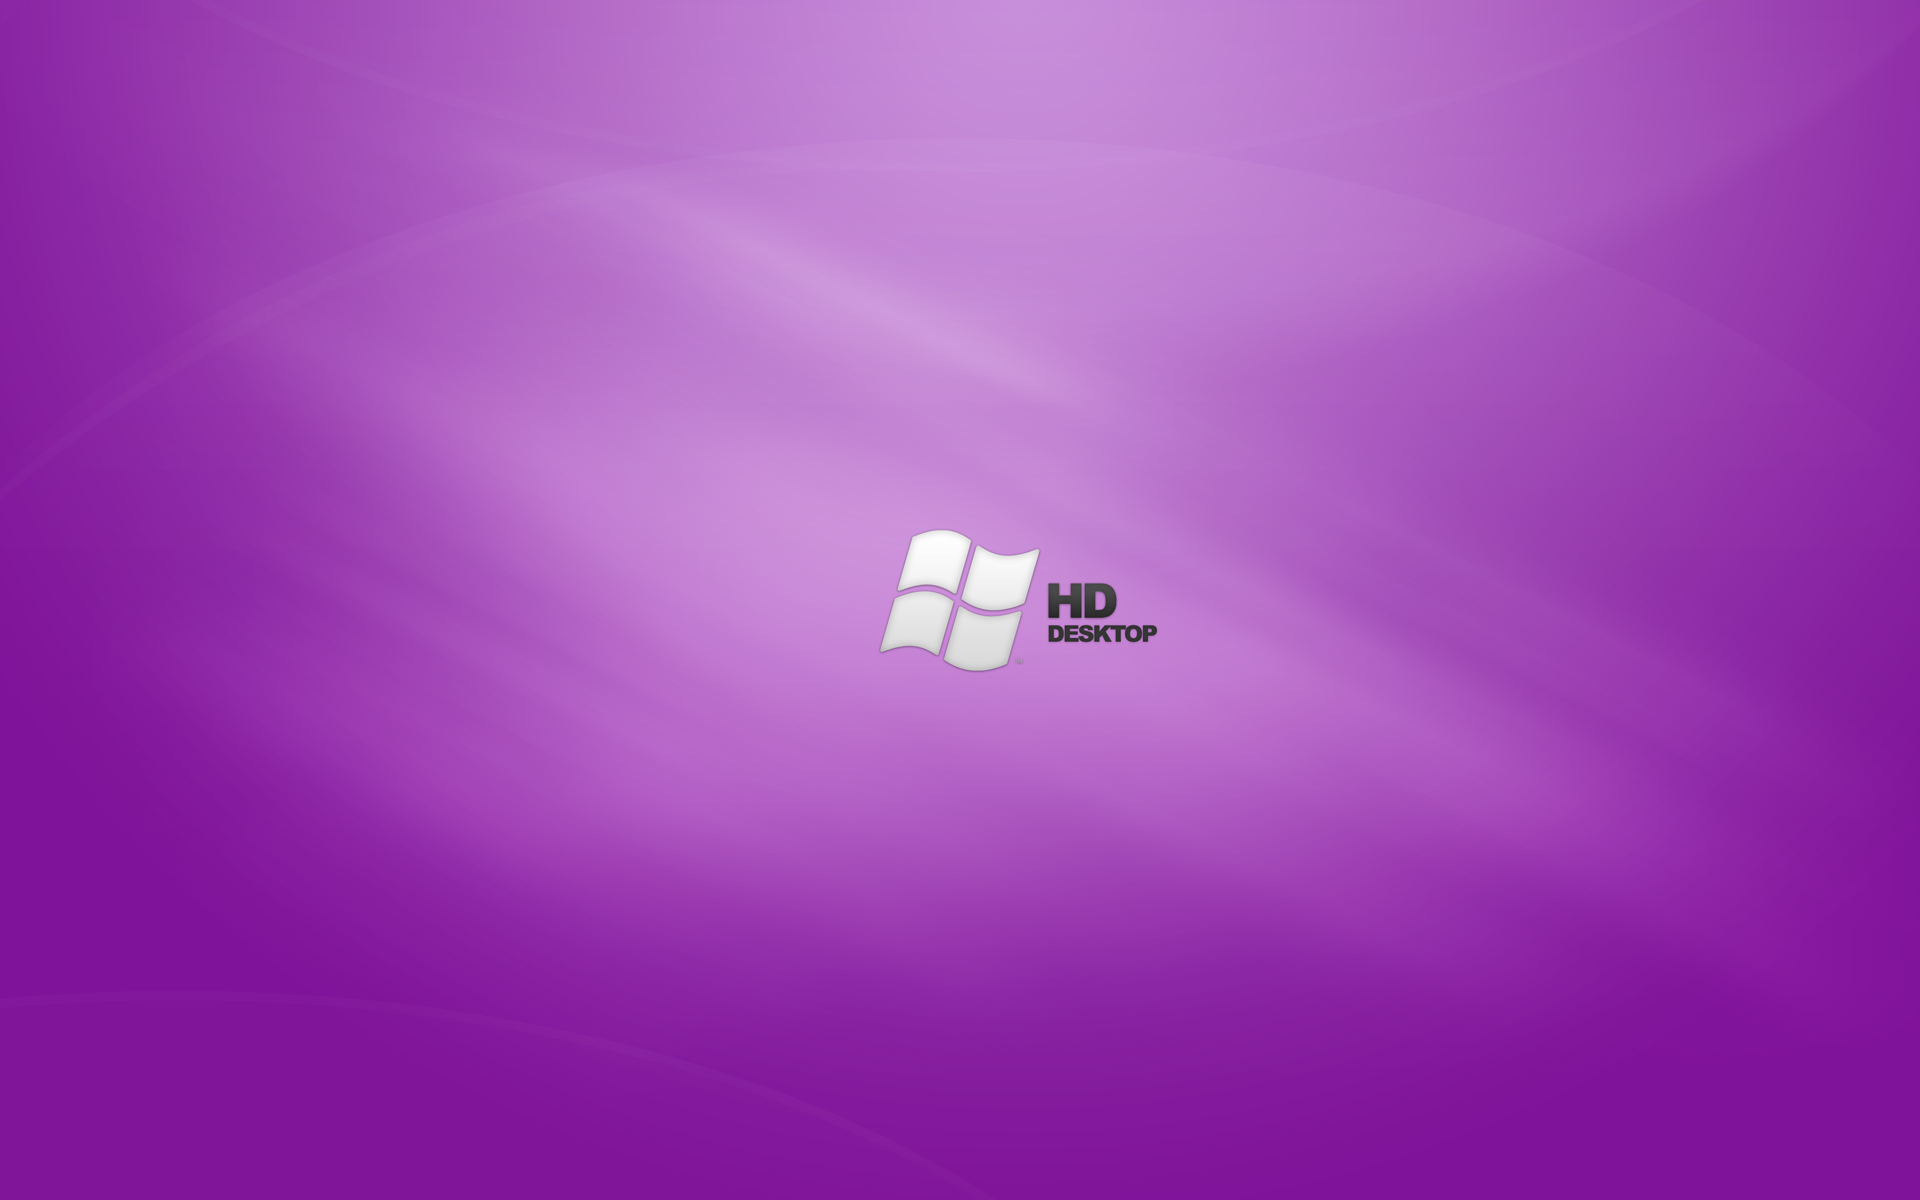 HD Wallpaper For Desktop Windows